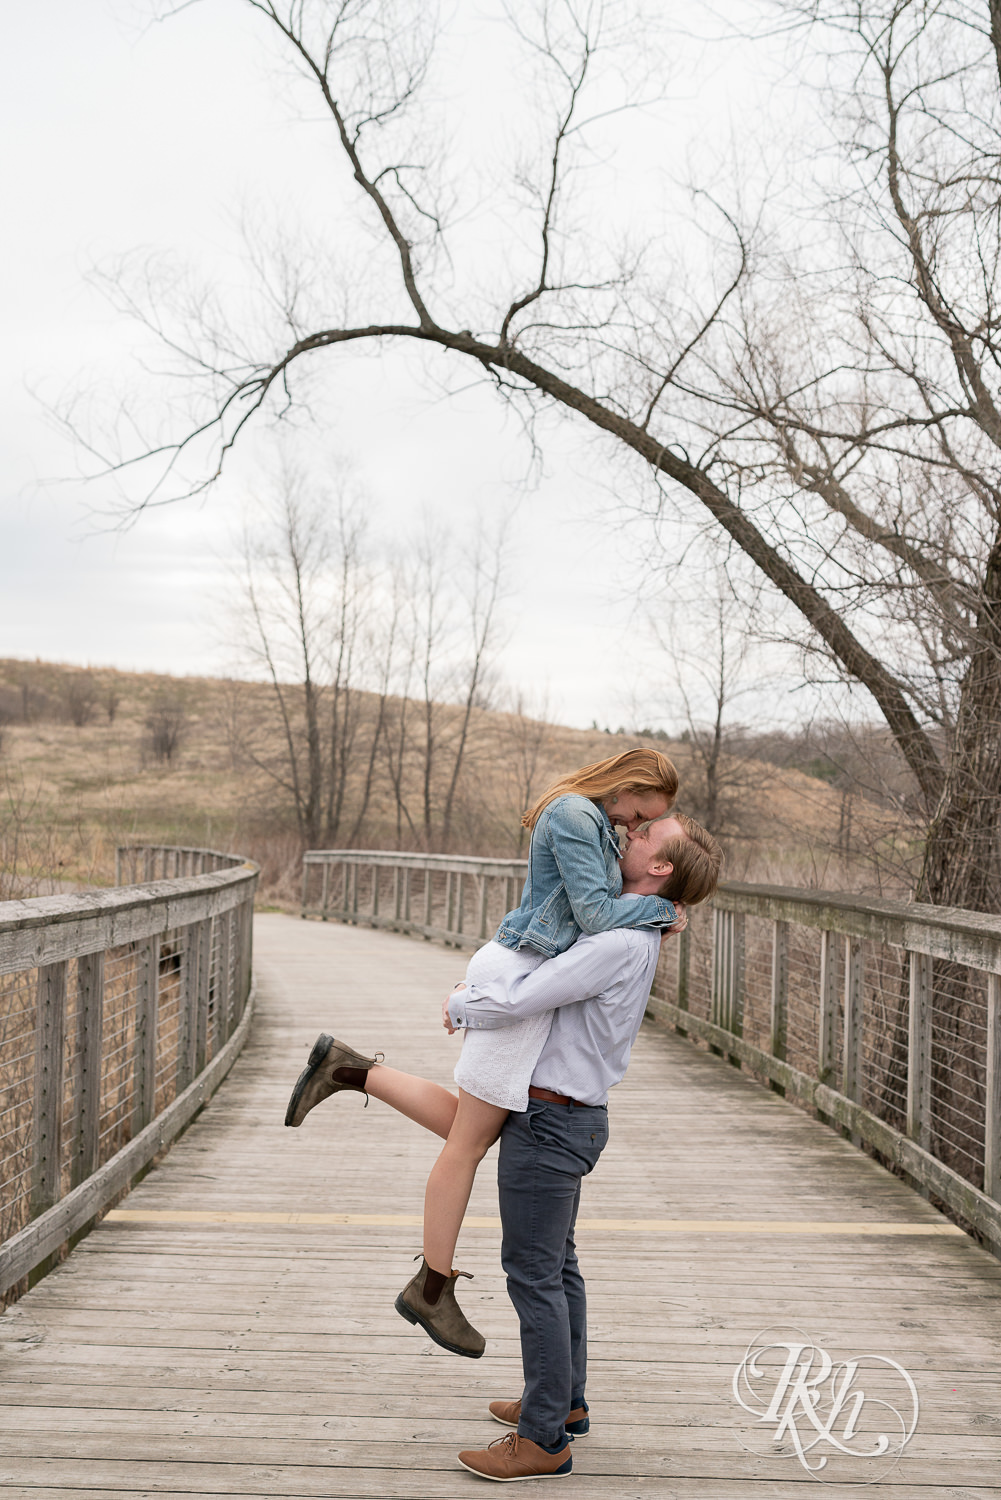 Man lifts woman in denim and dress on bridge on cloudy day in Eagan, Minnesota.